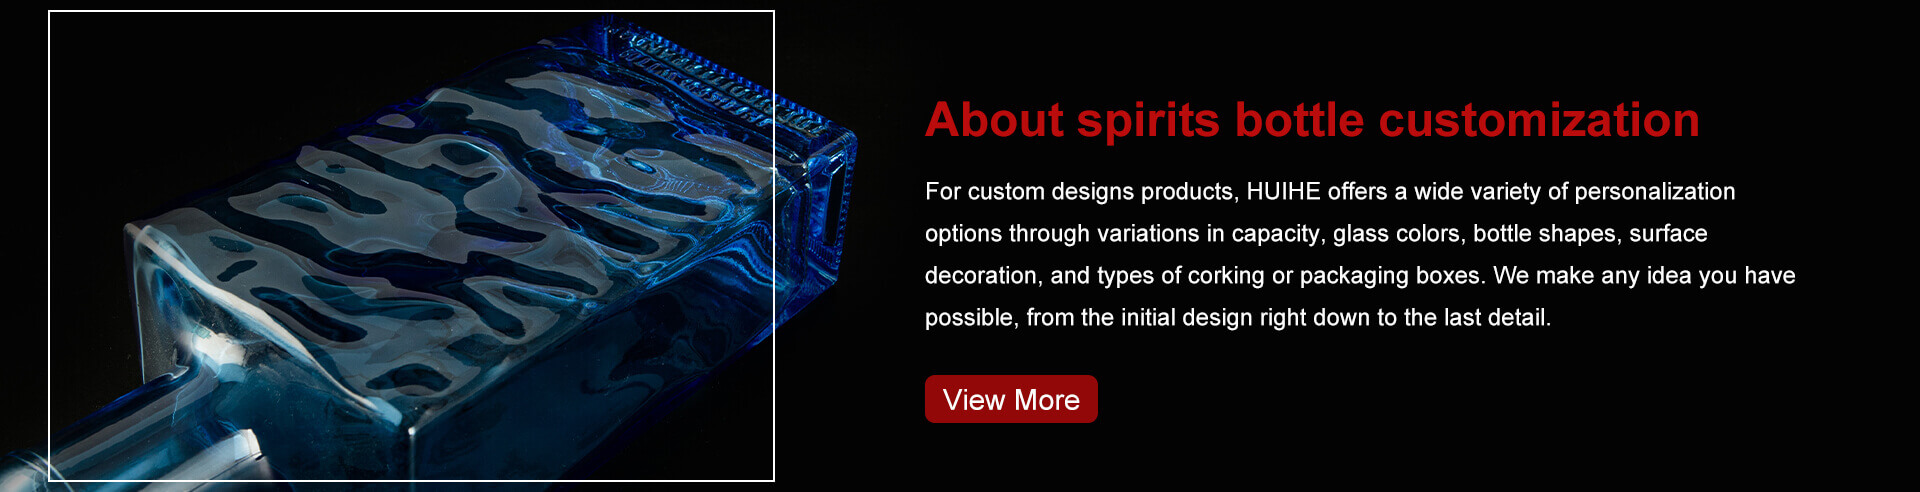 About spirits bottle customization